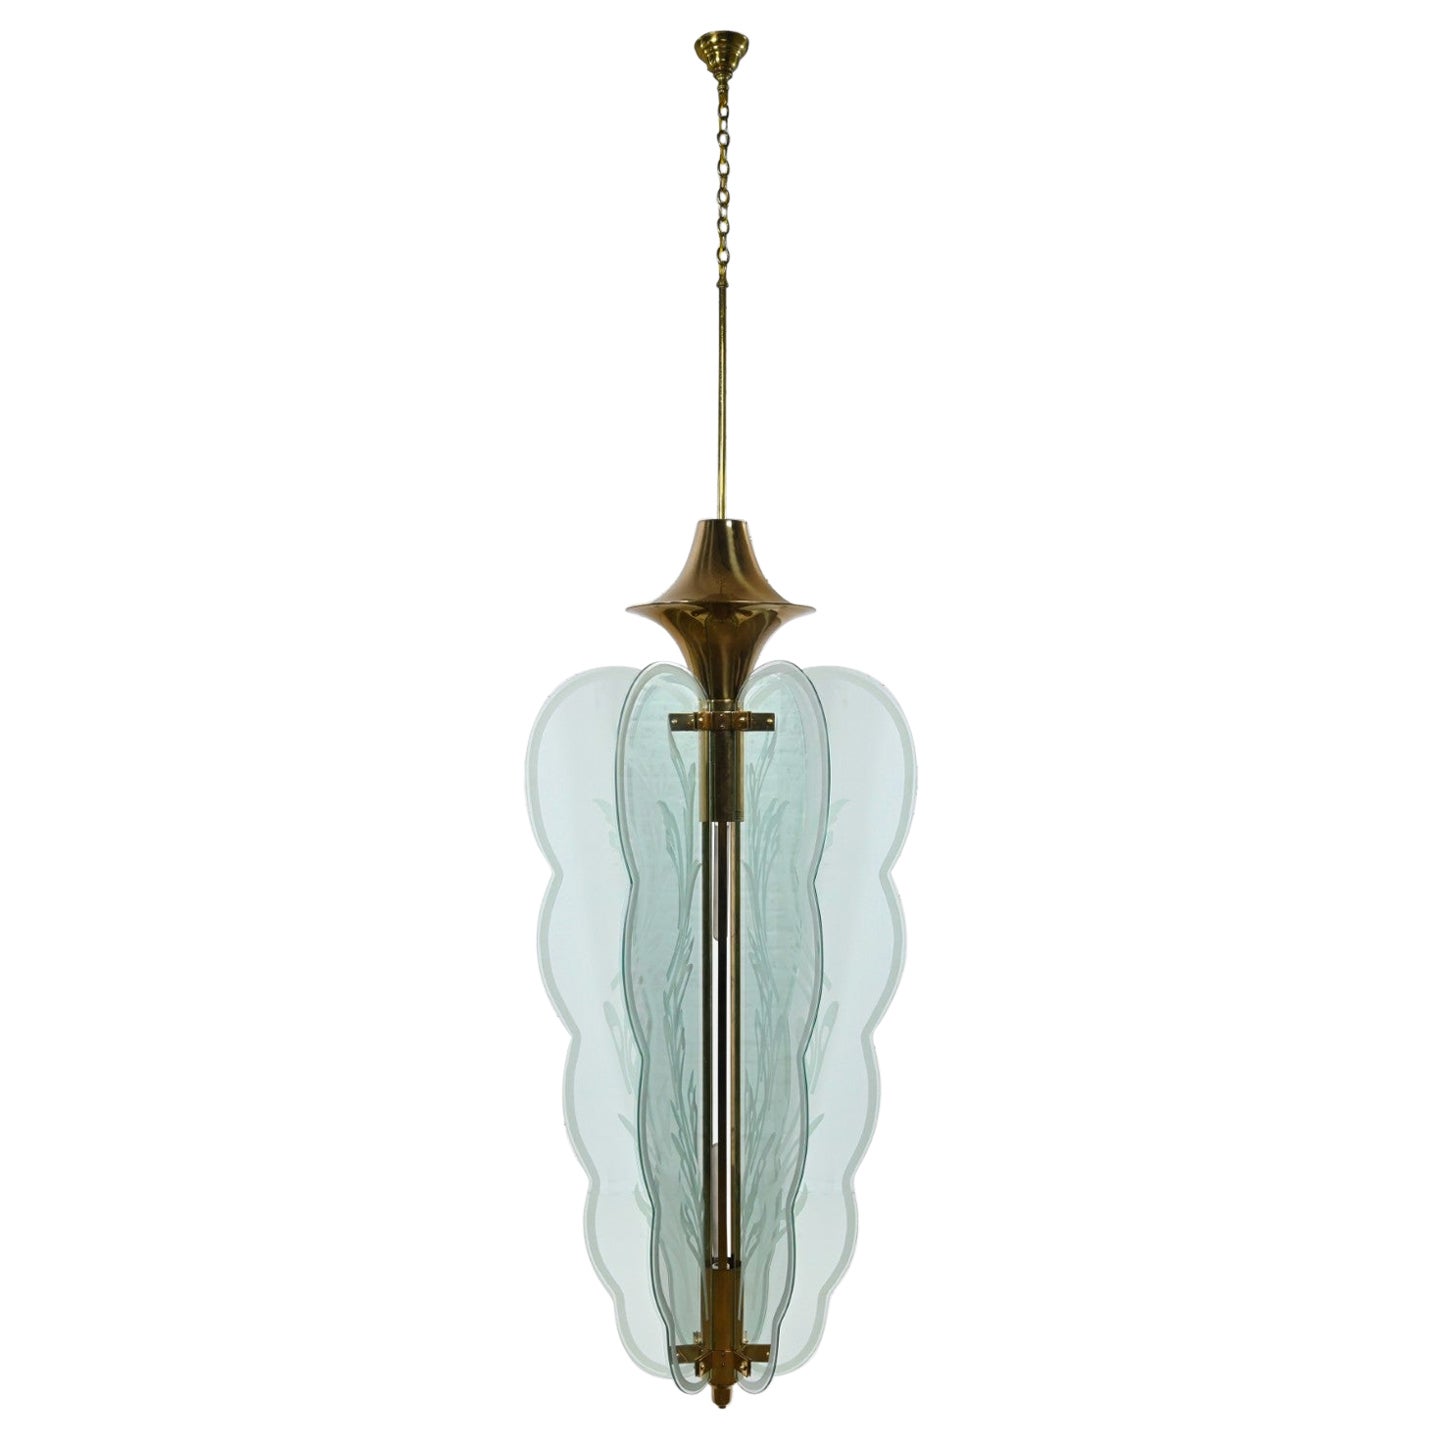 Art Deco Revival Monumental Brass Etched Glass Hanging Light Fixture Chandelier